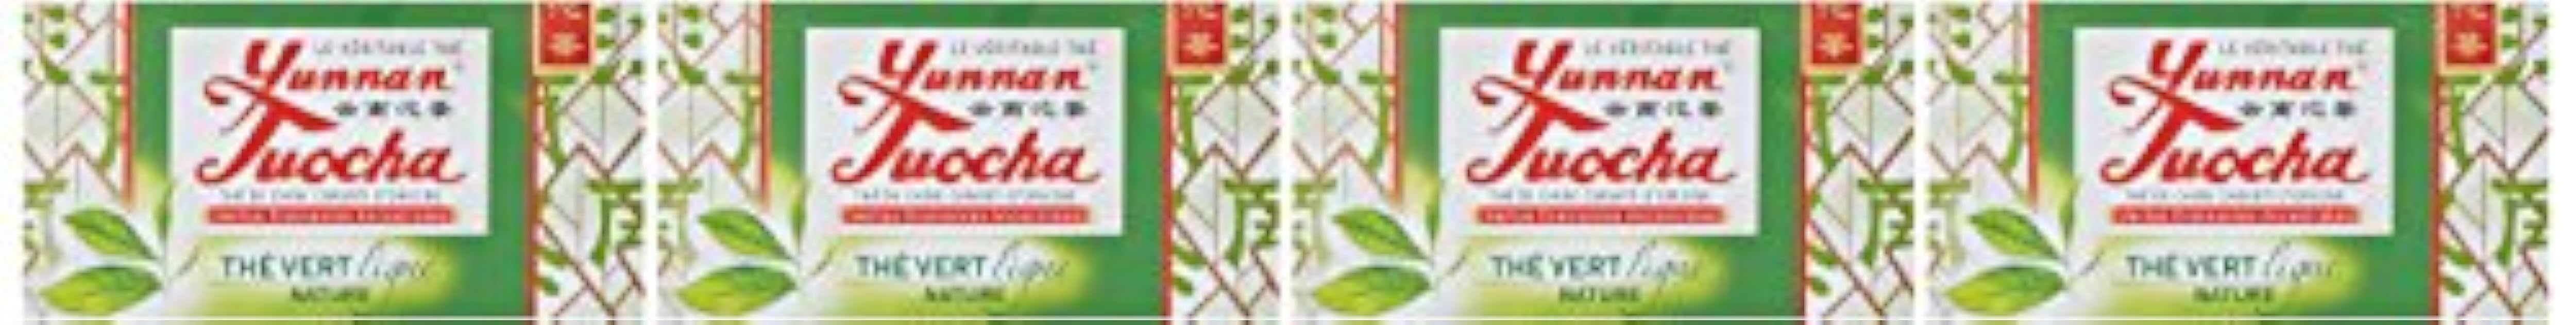 Yunnan Tuocha Thé Vert Nature 20 infusettes - Lot de 4 nHcJlPaw